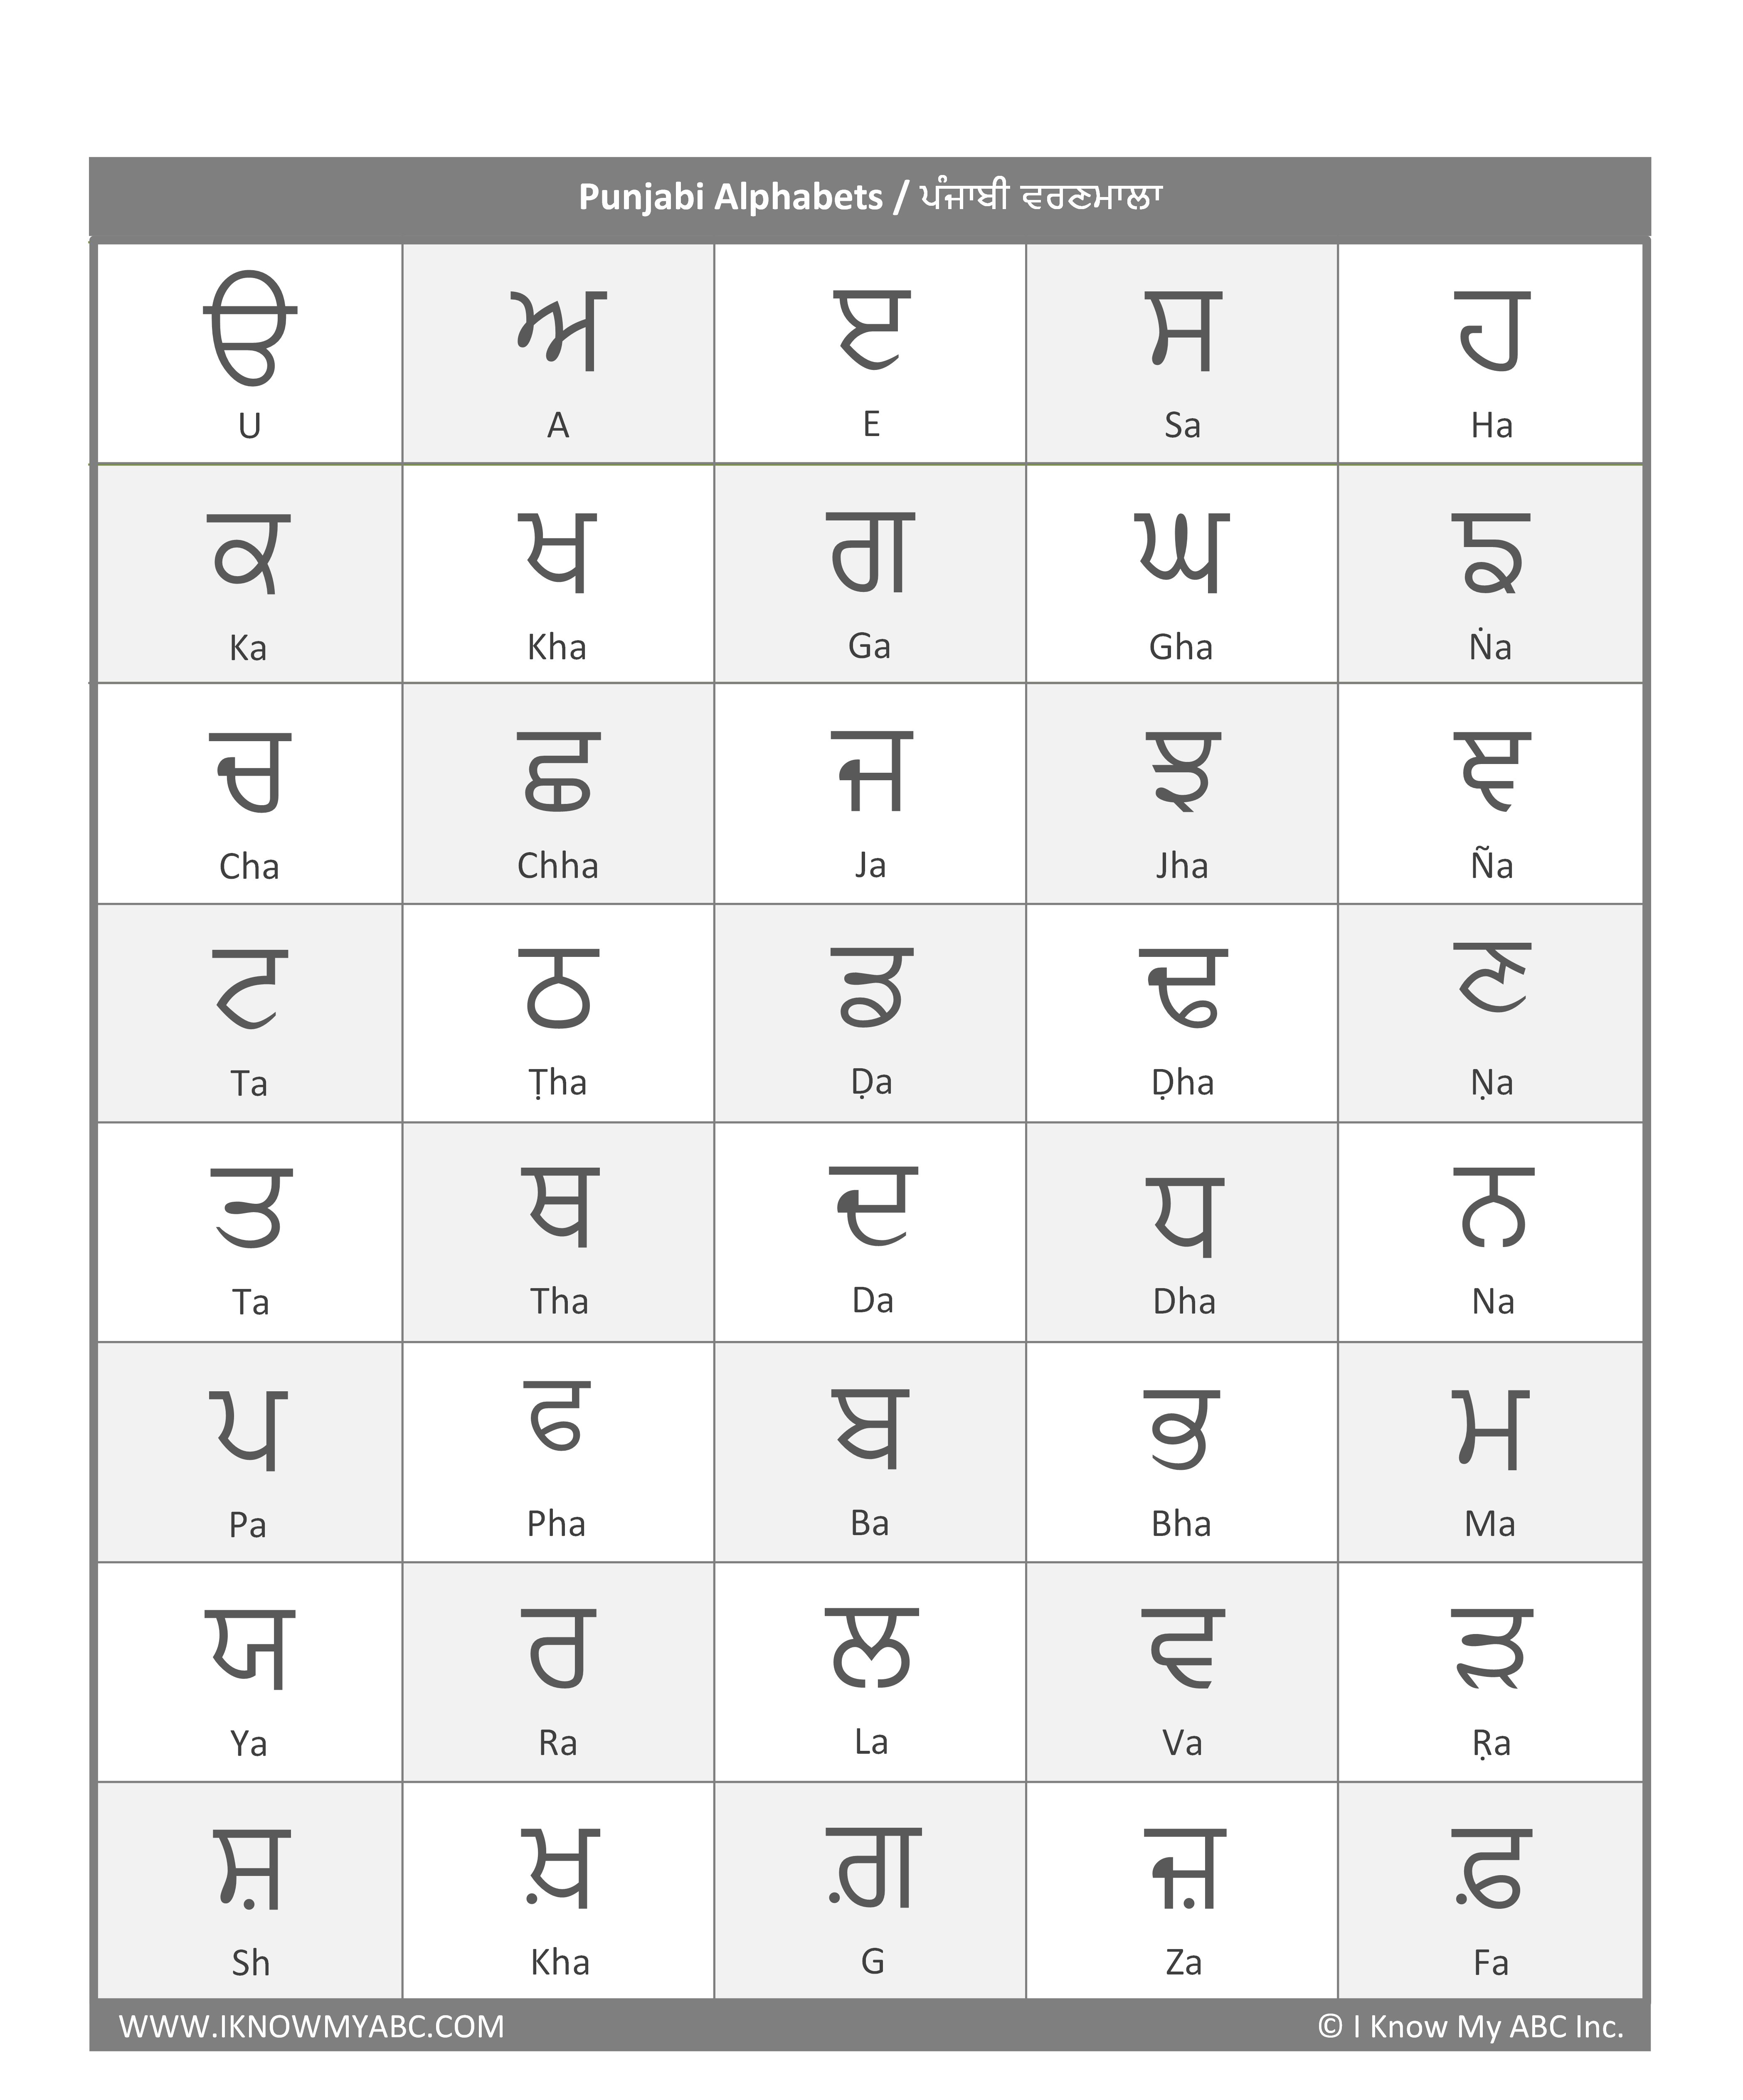 learn-punjabi-alphabet-free-educational-resources-i-know-my-abc-inc